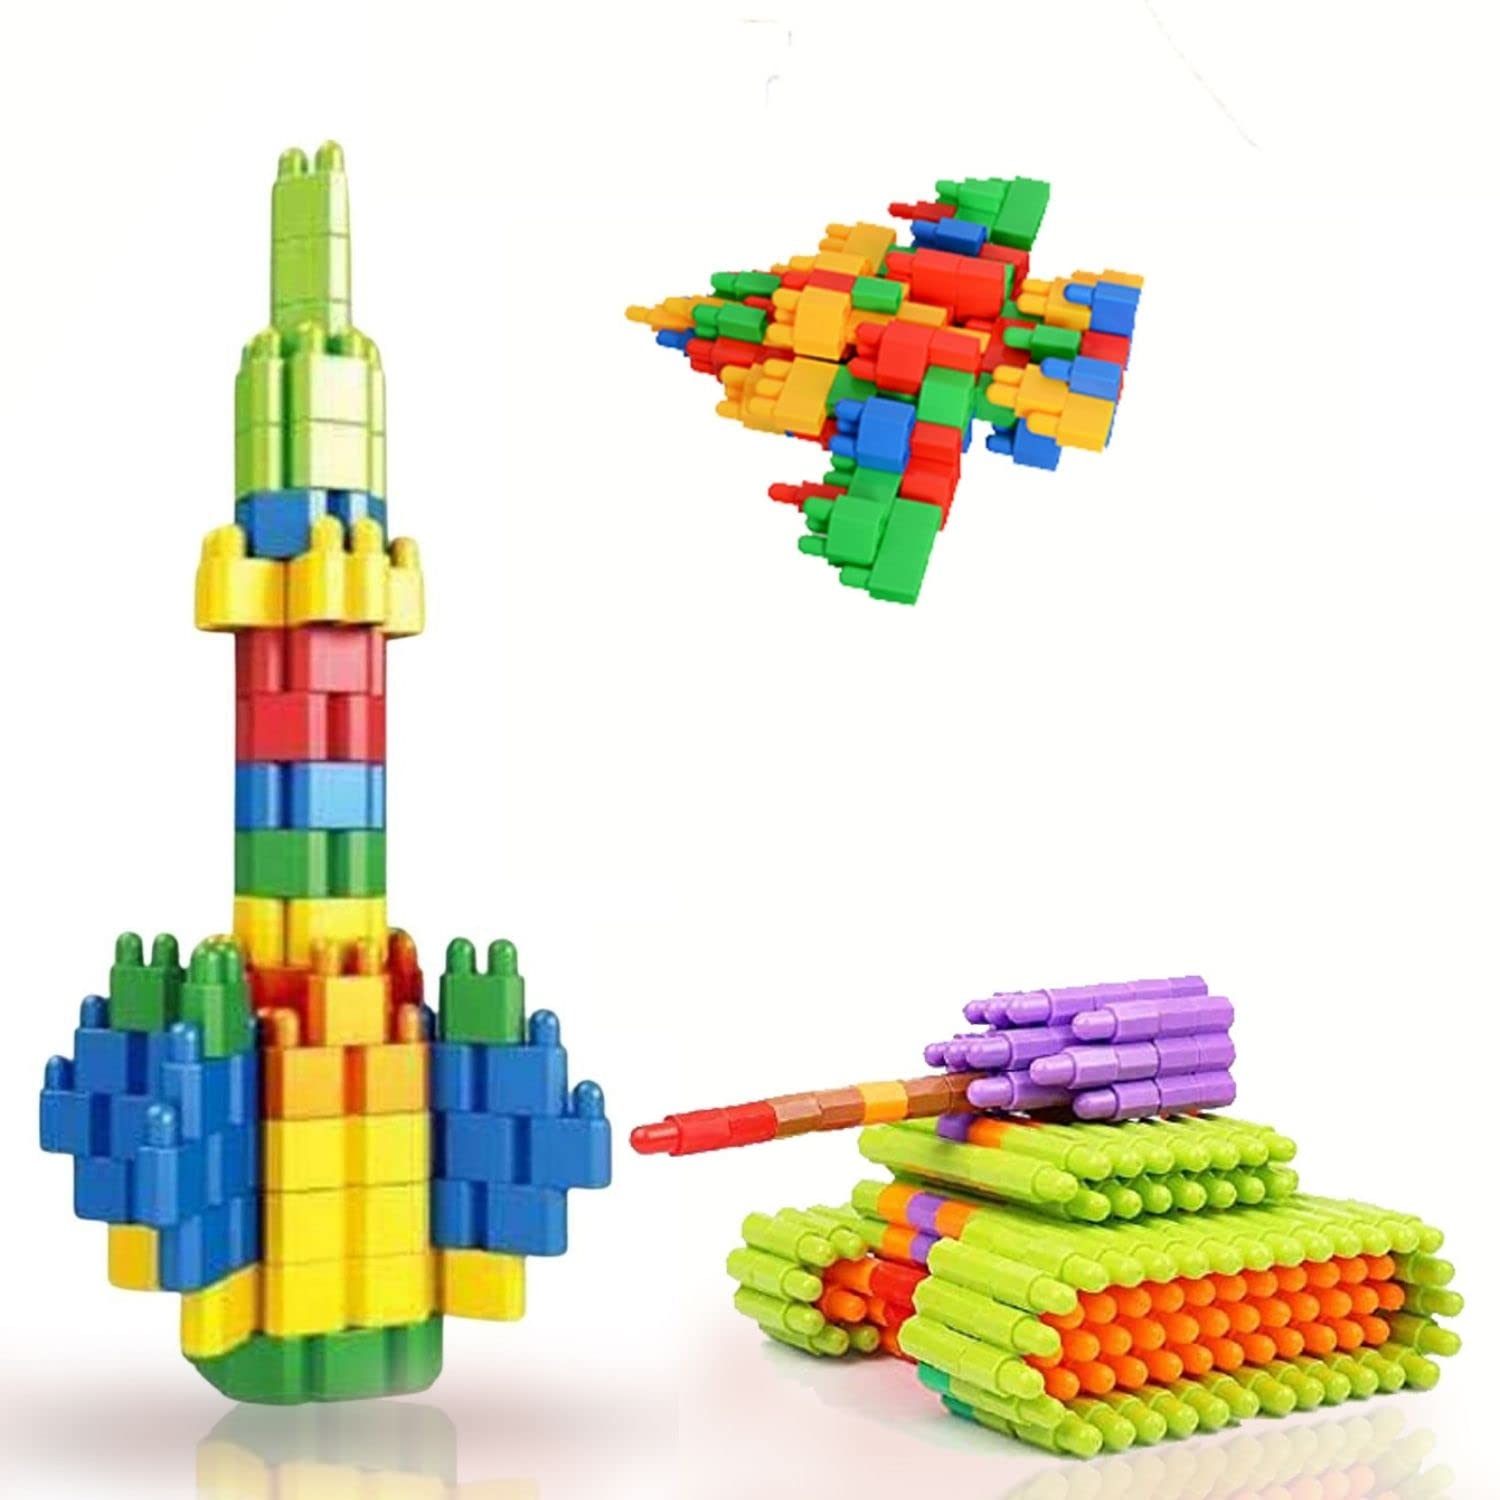 Kids Mandi Blocks Game Constructive Play - Educational Toy Set